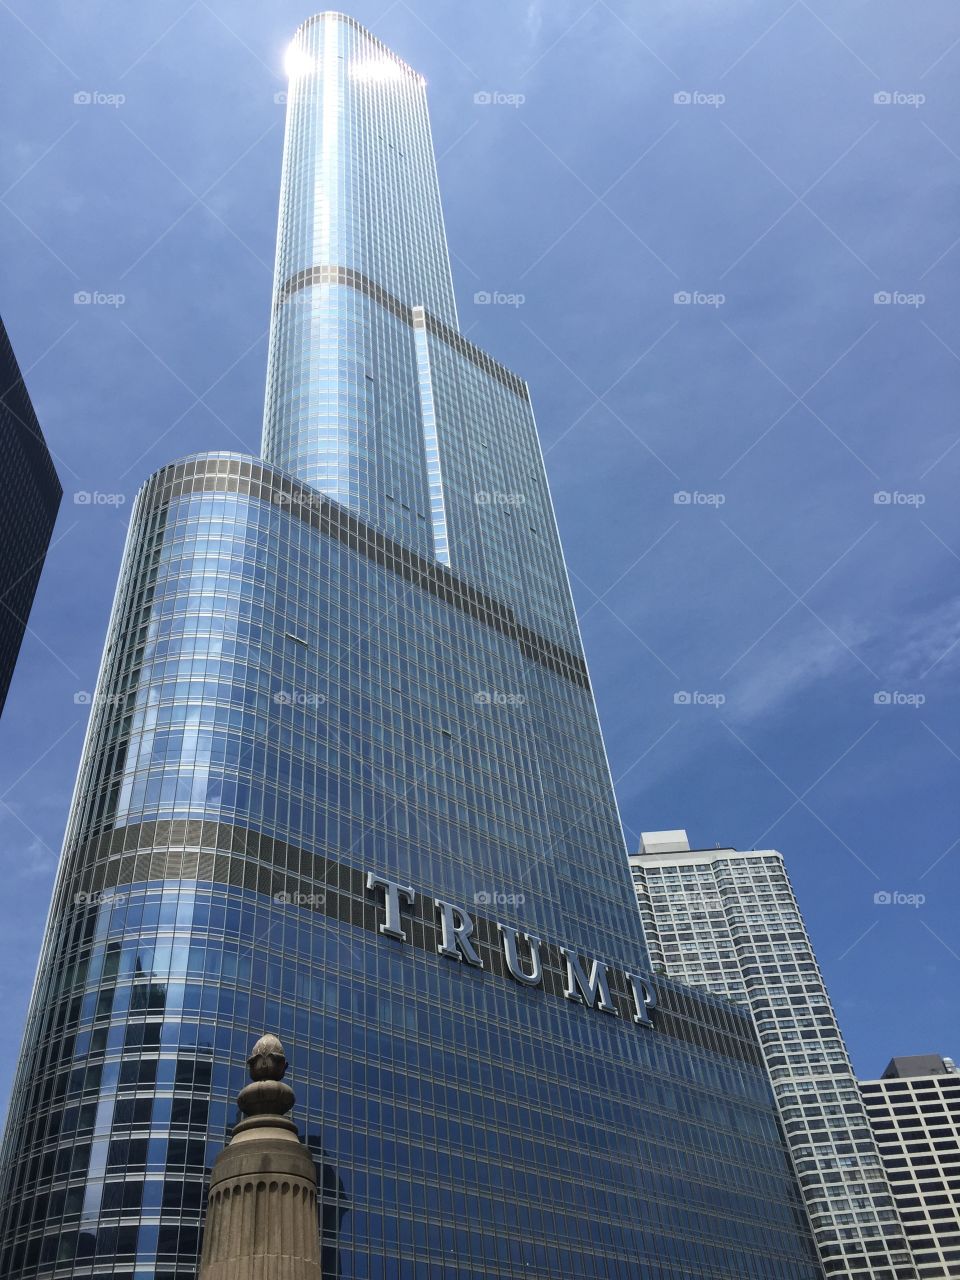 Trump Tower. Trump tower, Chicago 